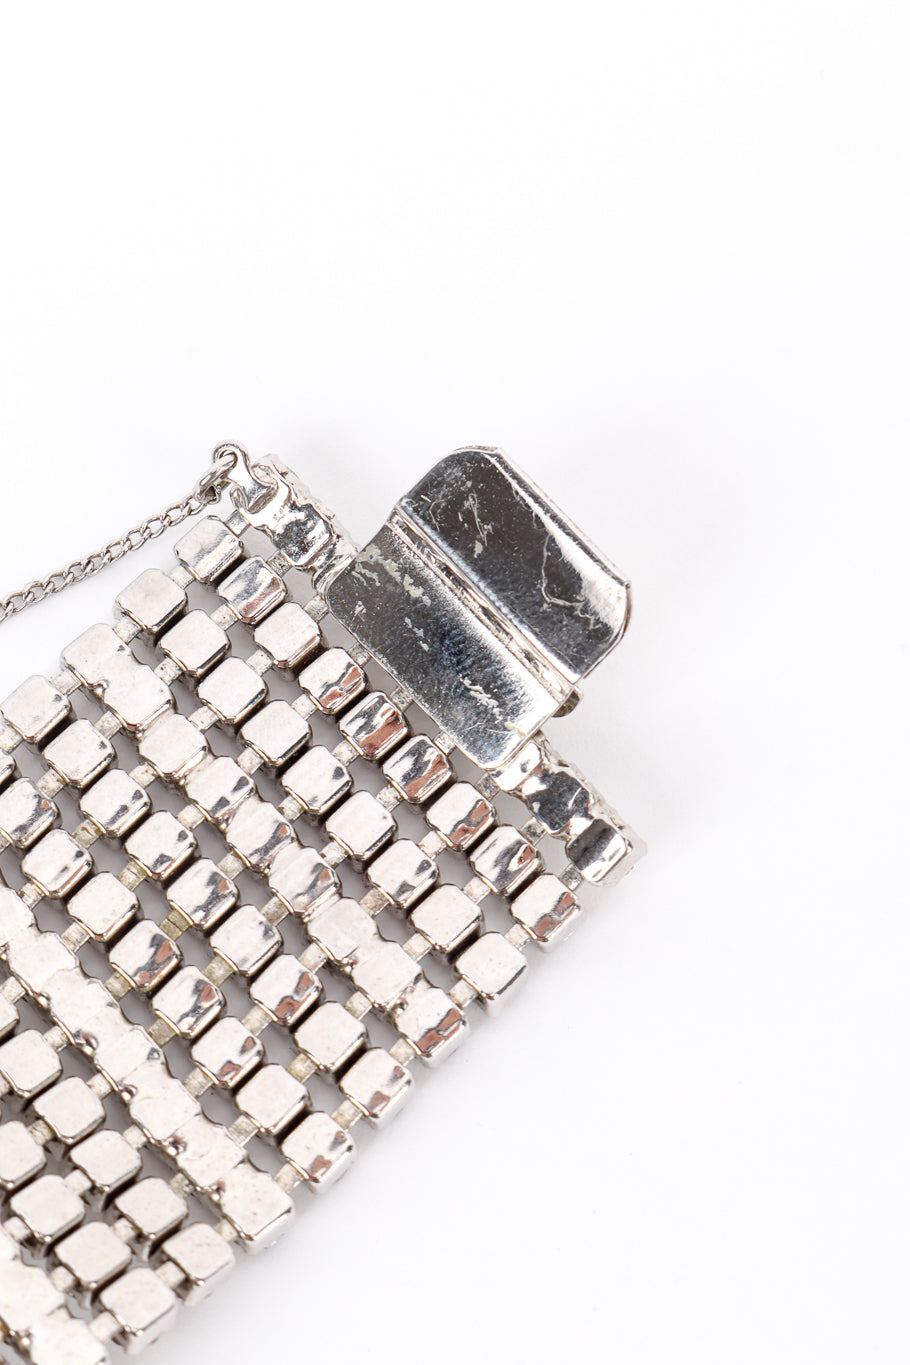 Vintage Checkered Rhinestone Bracelet tab closure @recess la